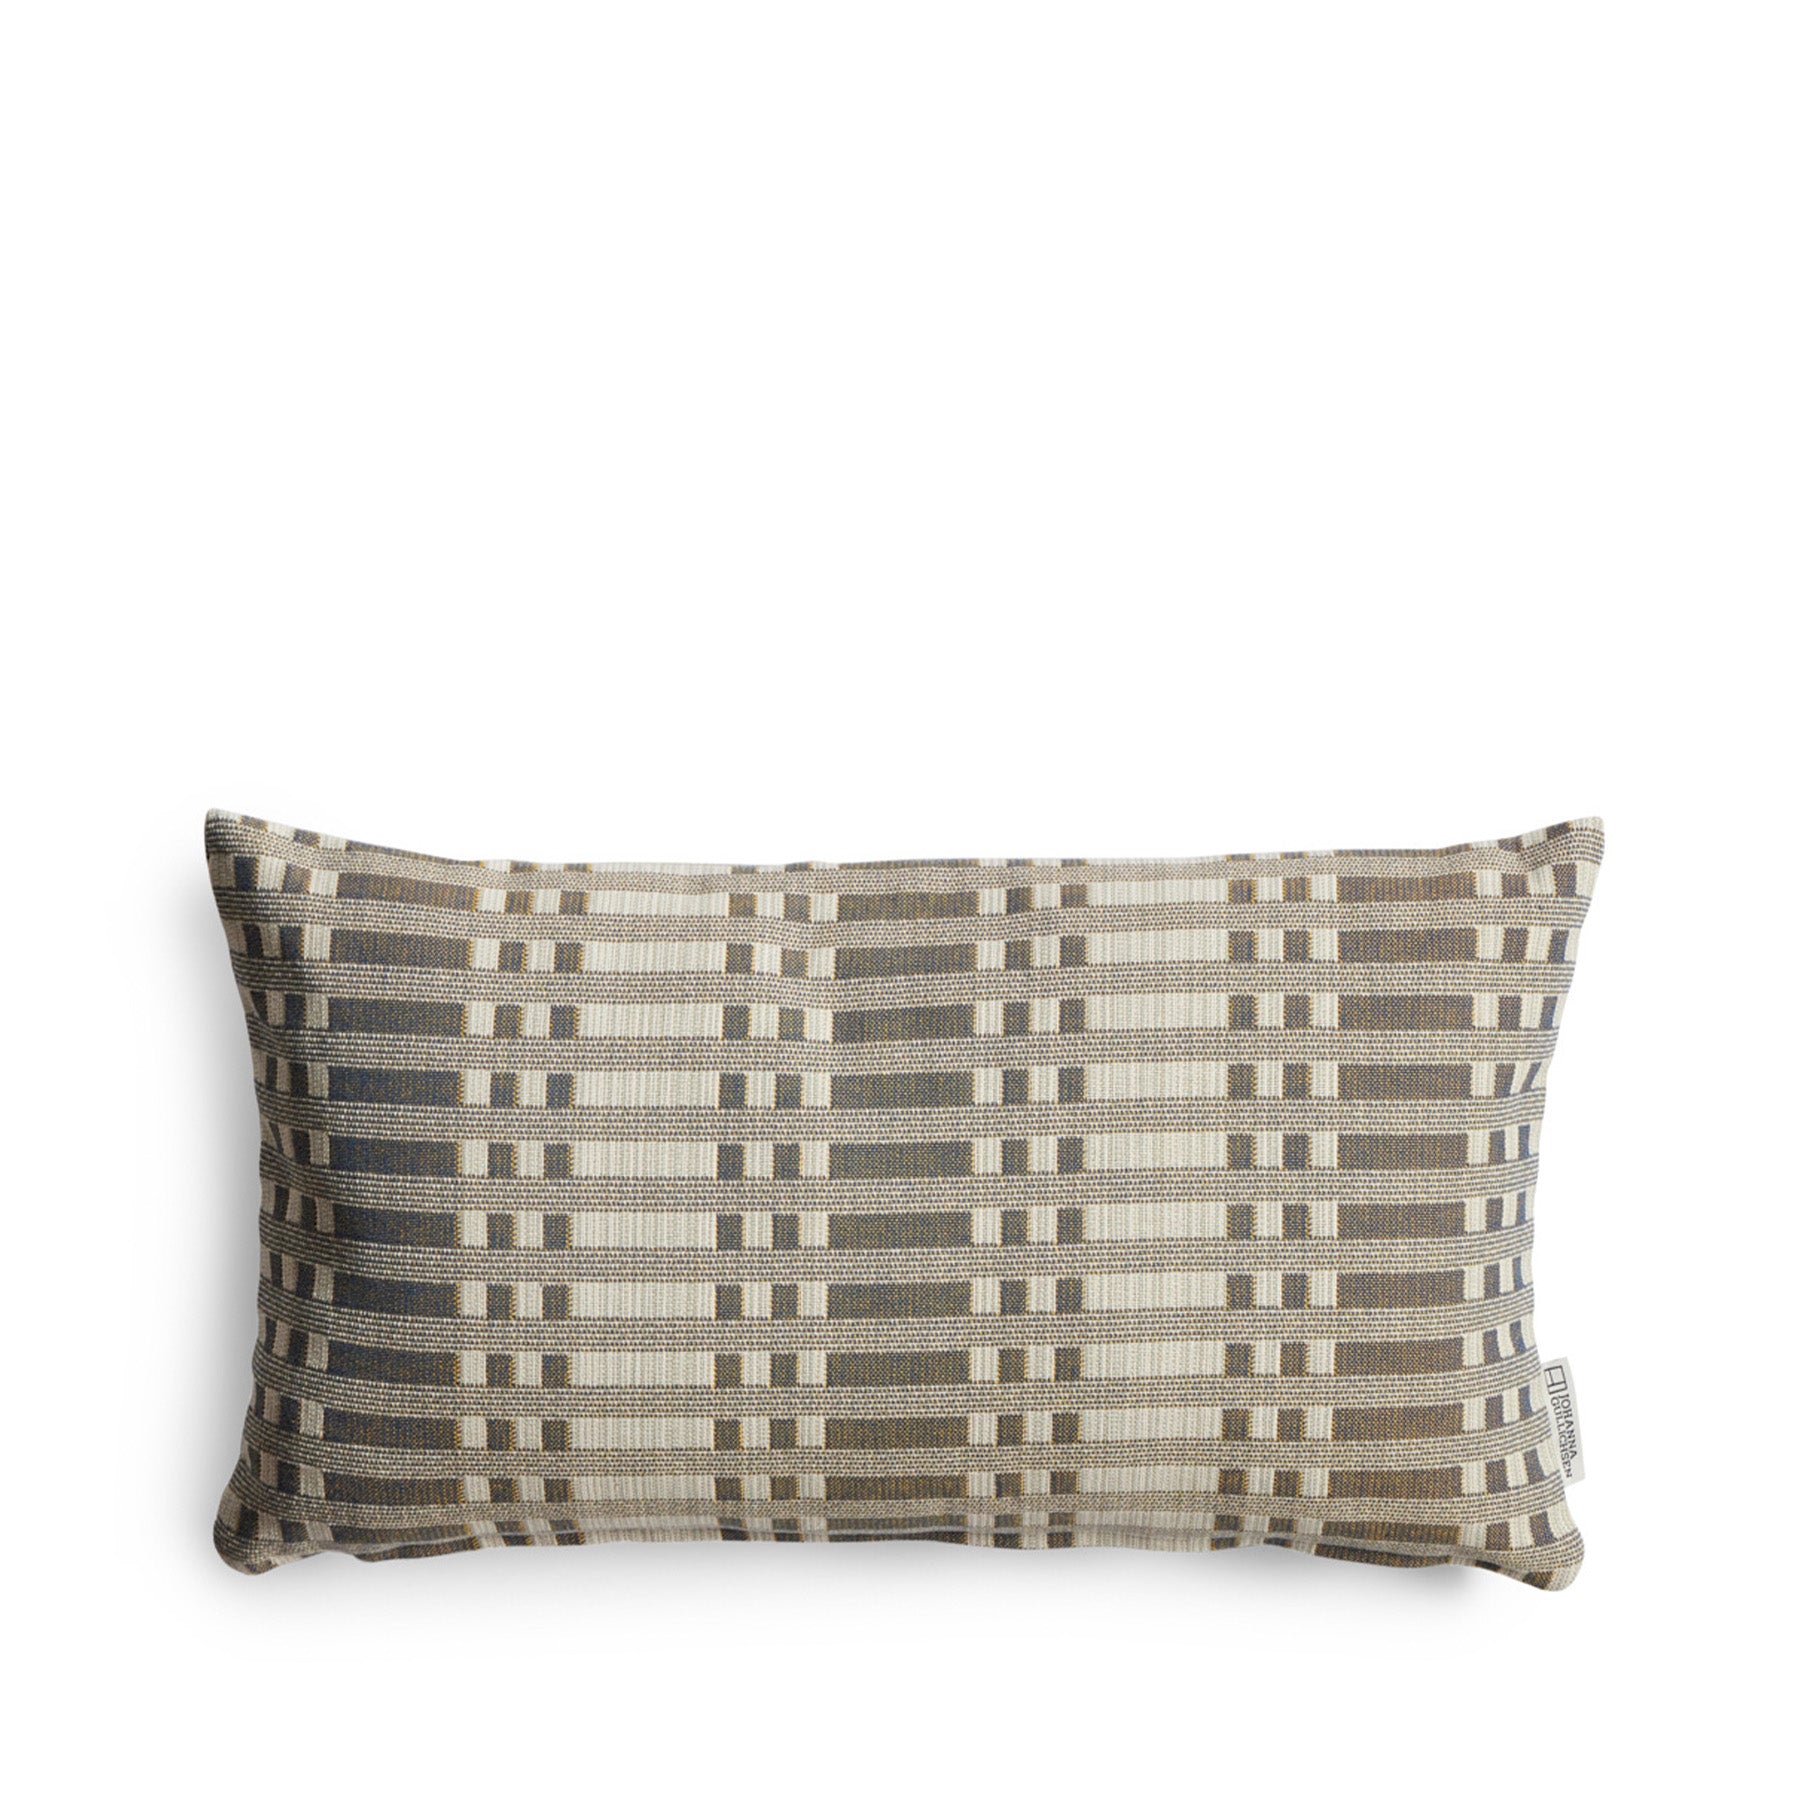 Tithonus Cushion in Lead Gray Zoom Image 1